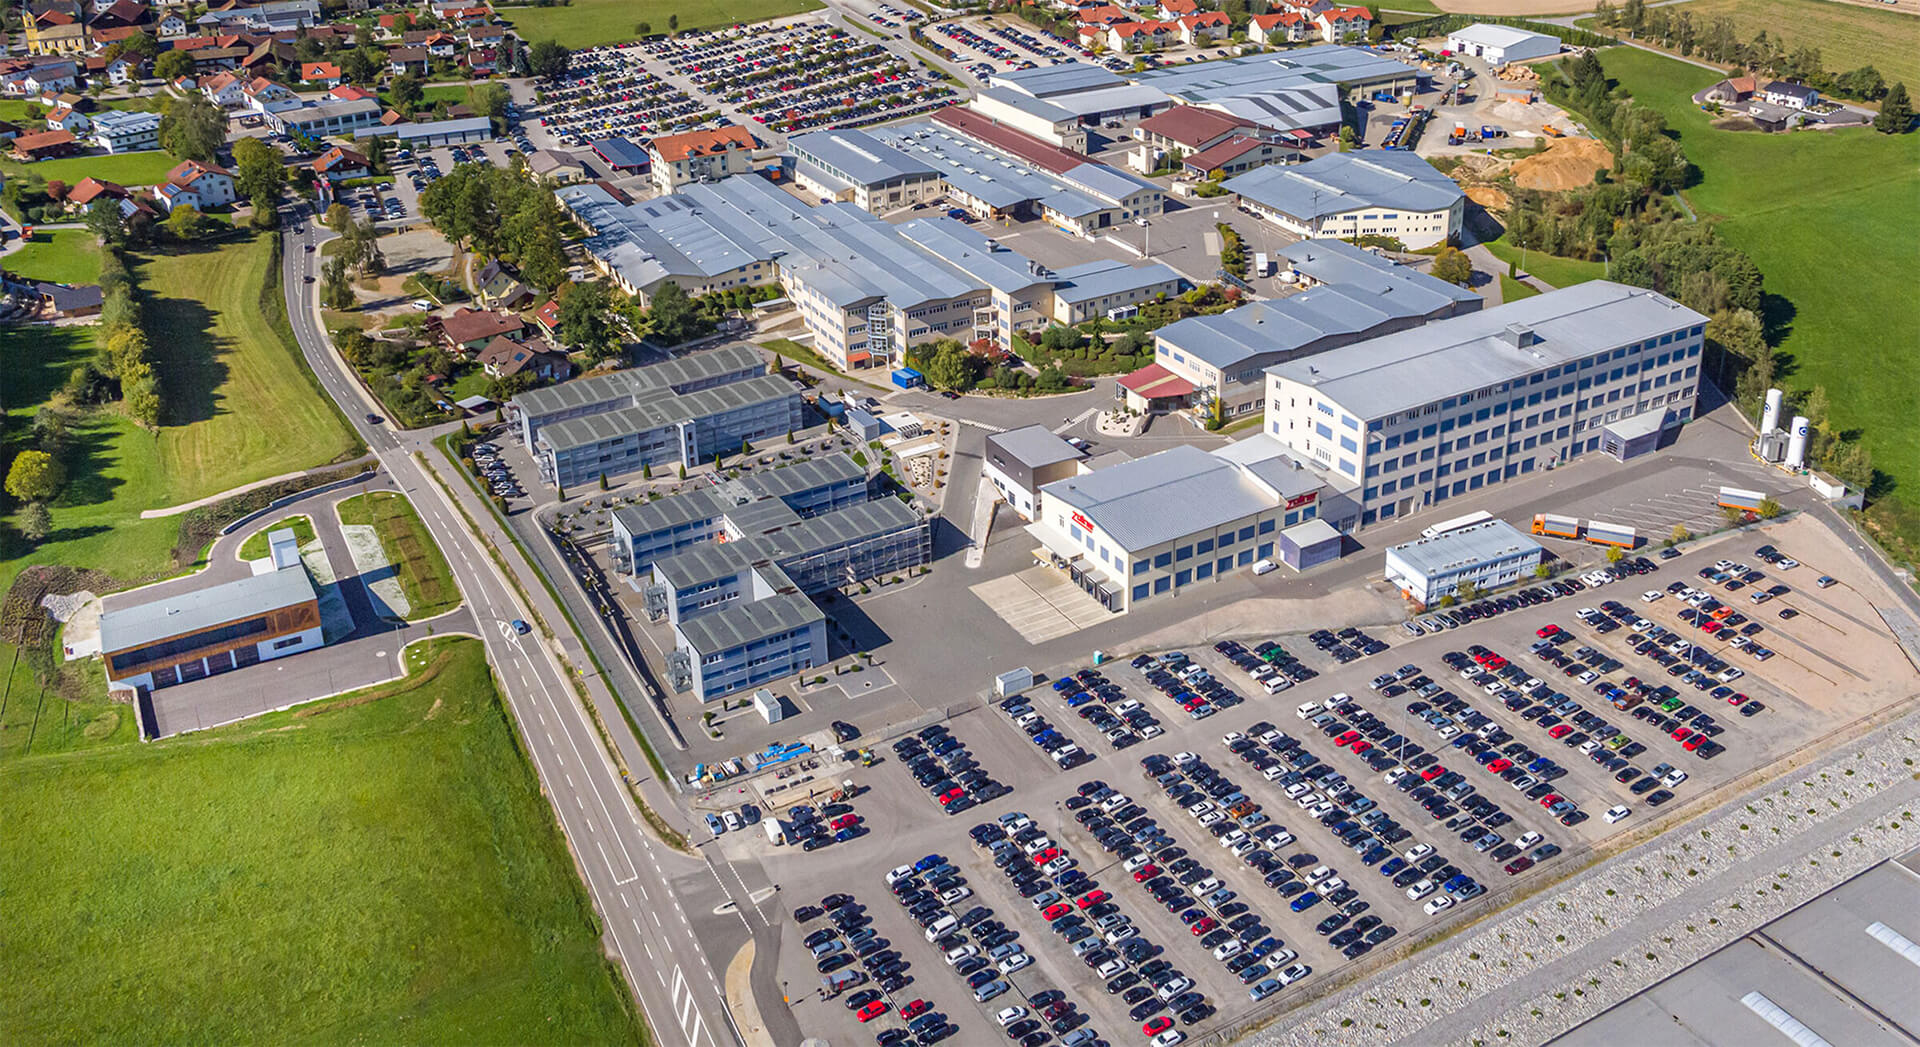 Zollner main plant Zandt aerial view